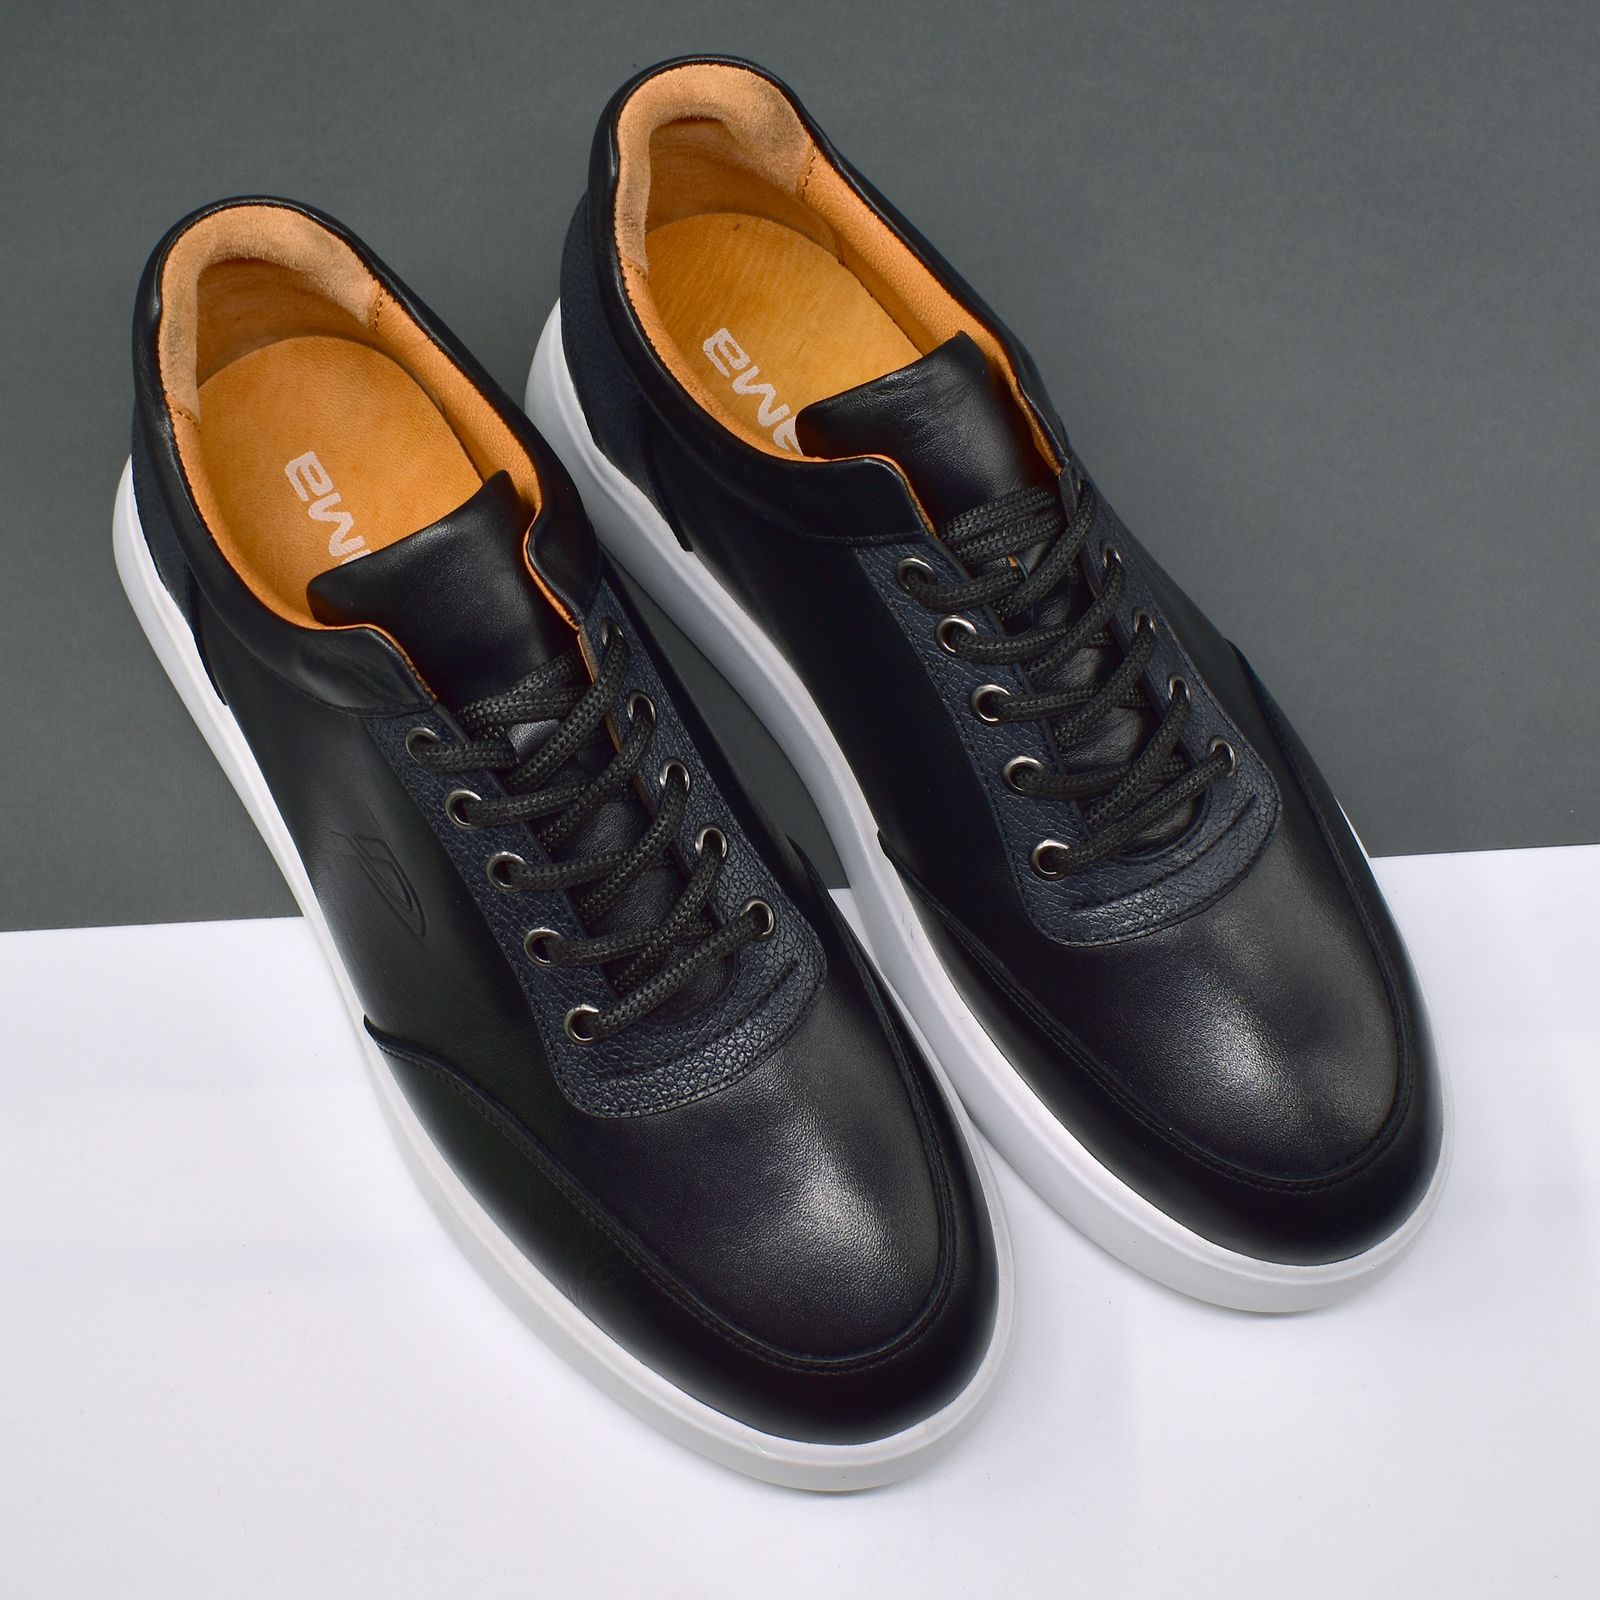 کفش روزمره مردانه پاما مدل ME-403 کد G1805 -  - 5